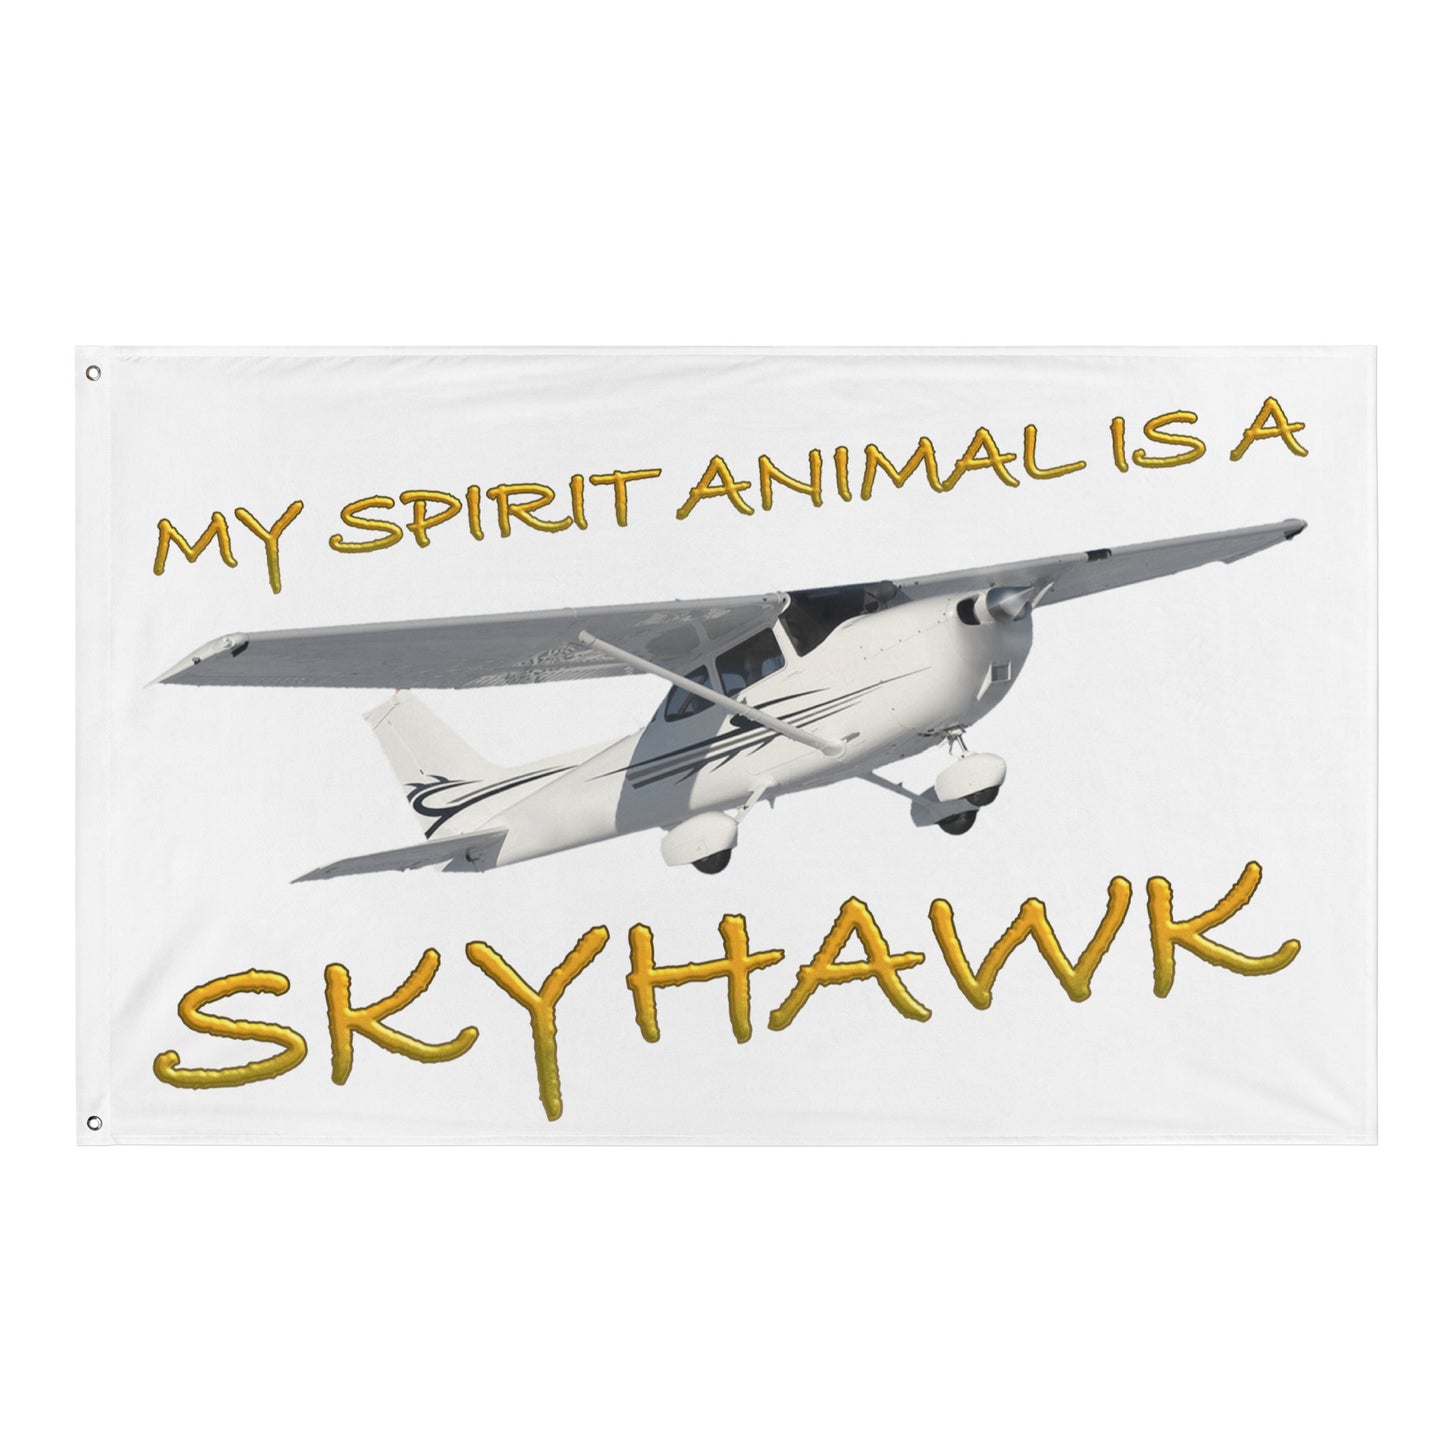 My Spirit Animal is a Skyhawk - flag (yellow)